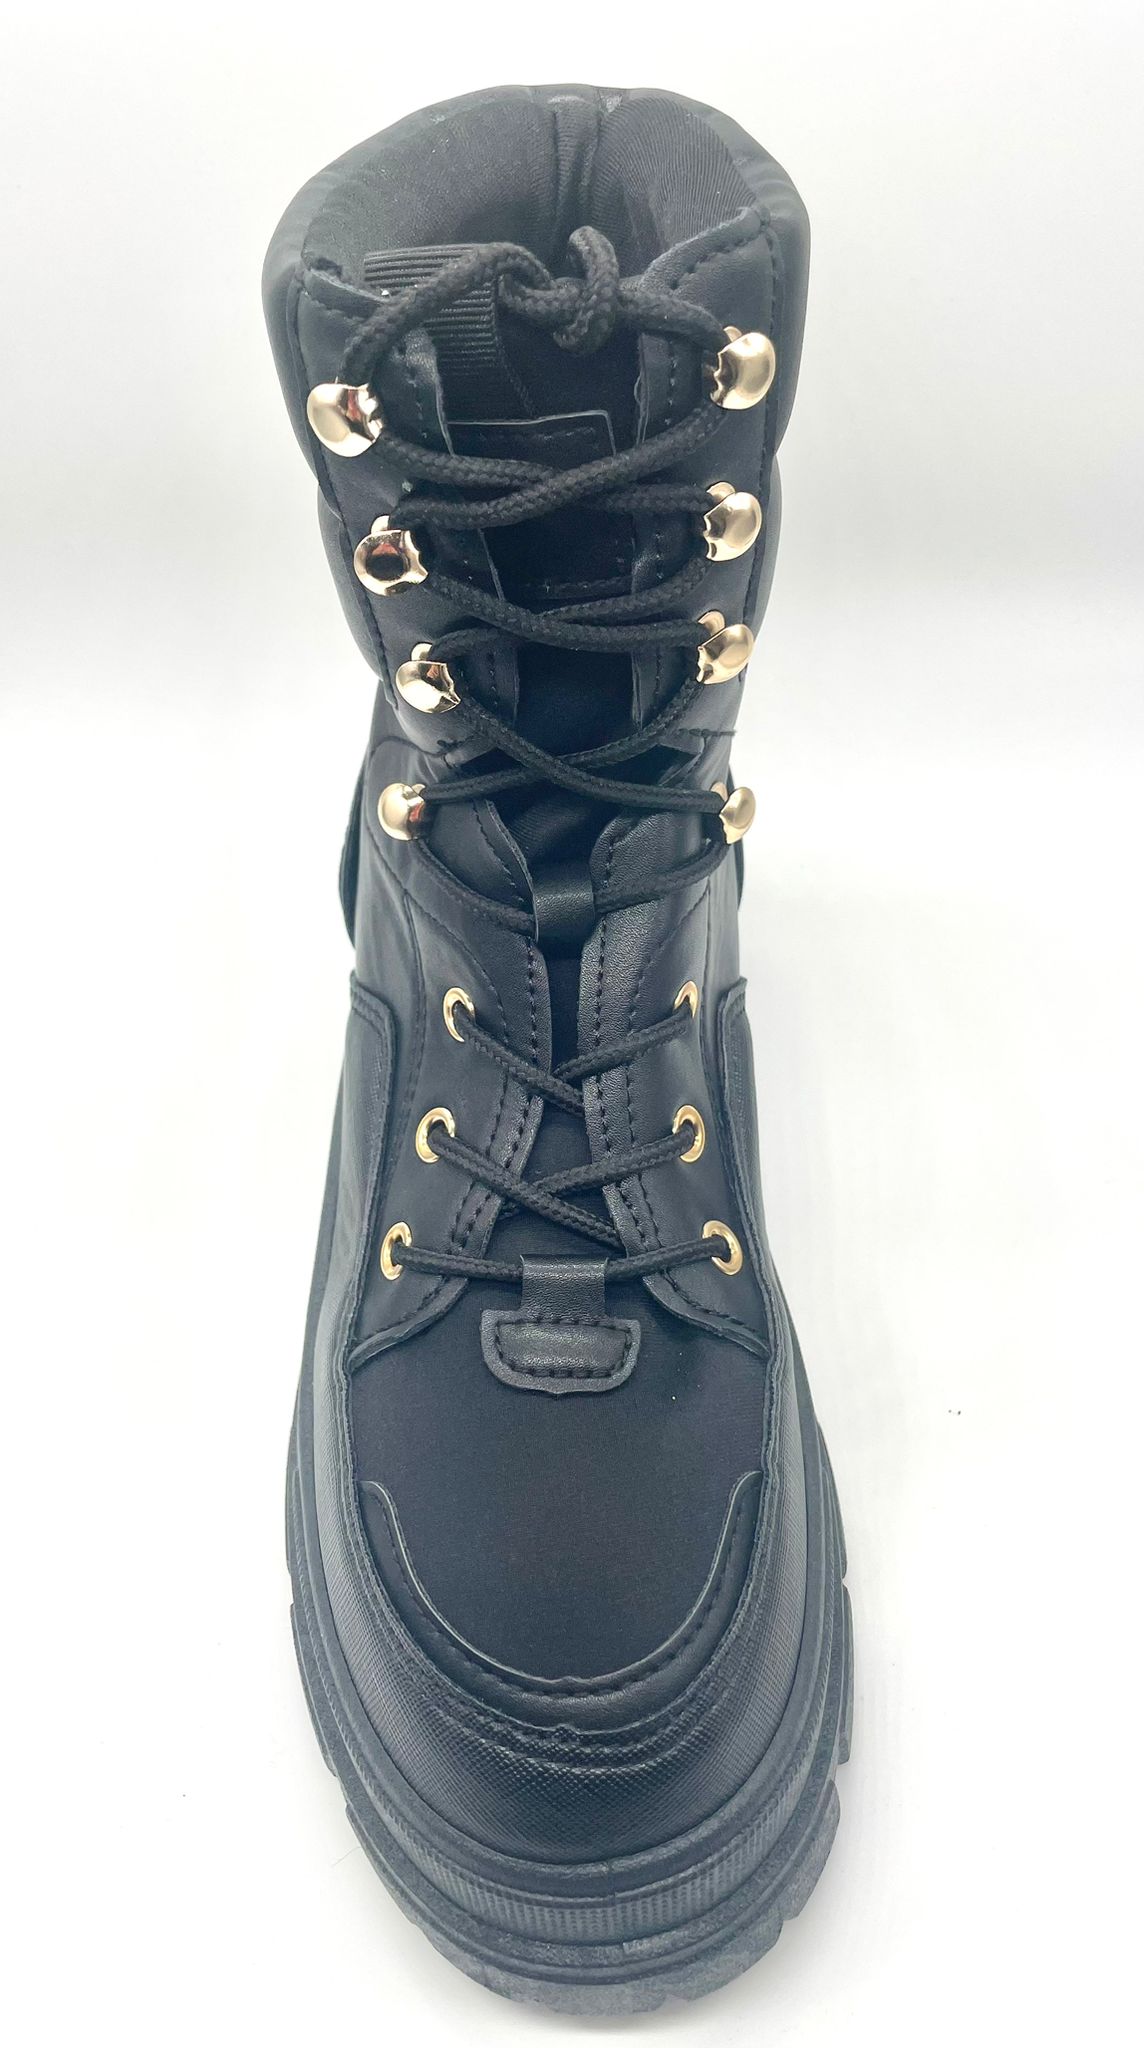 Winter Princess Boots (Black)